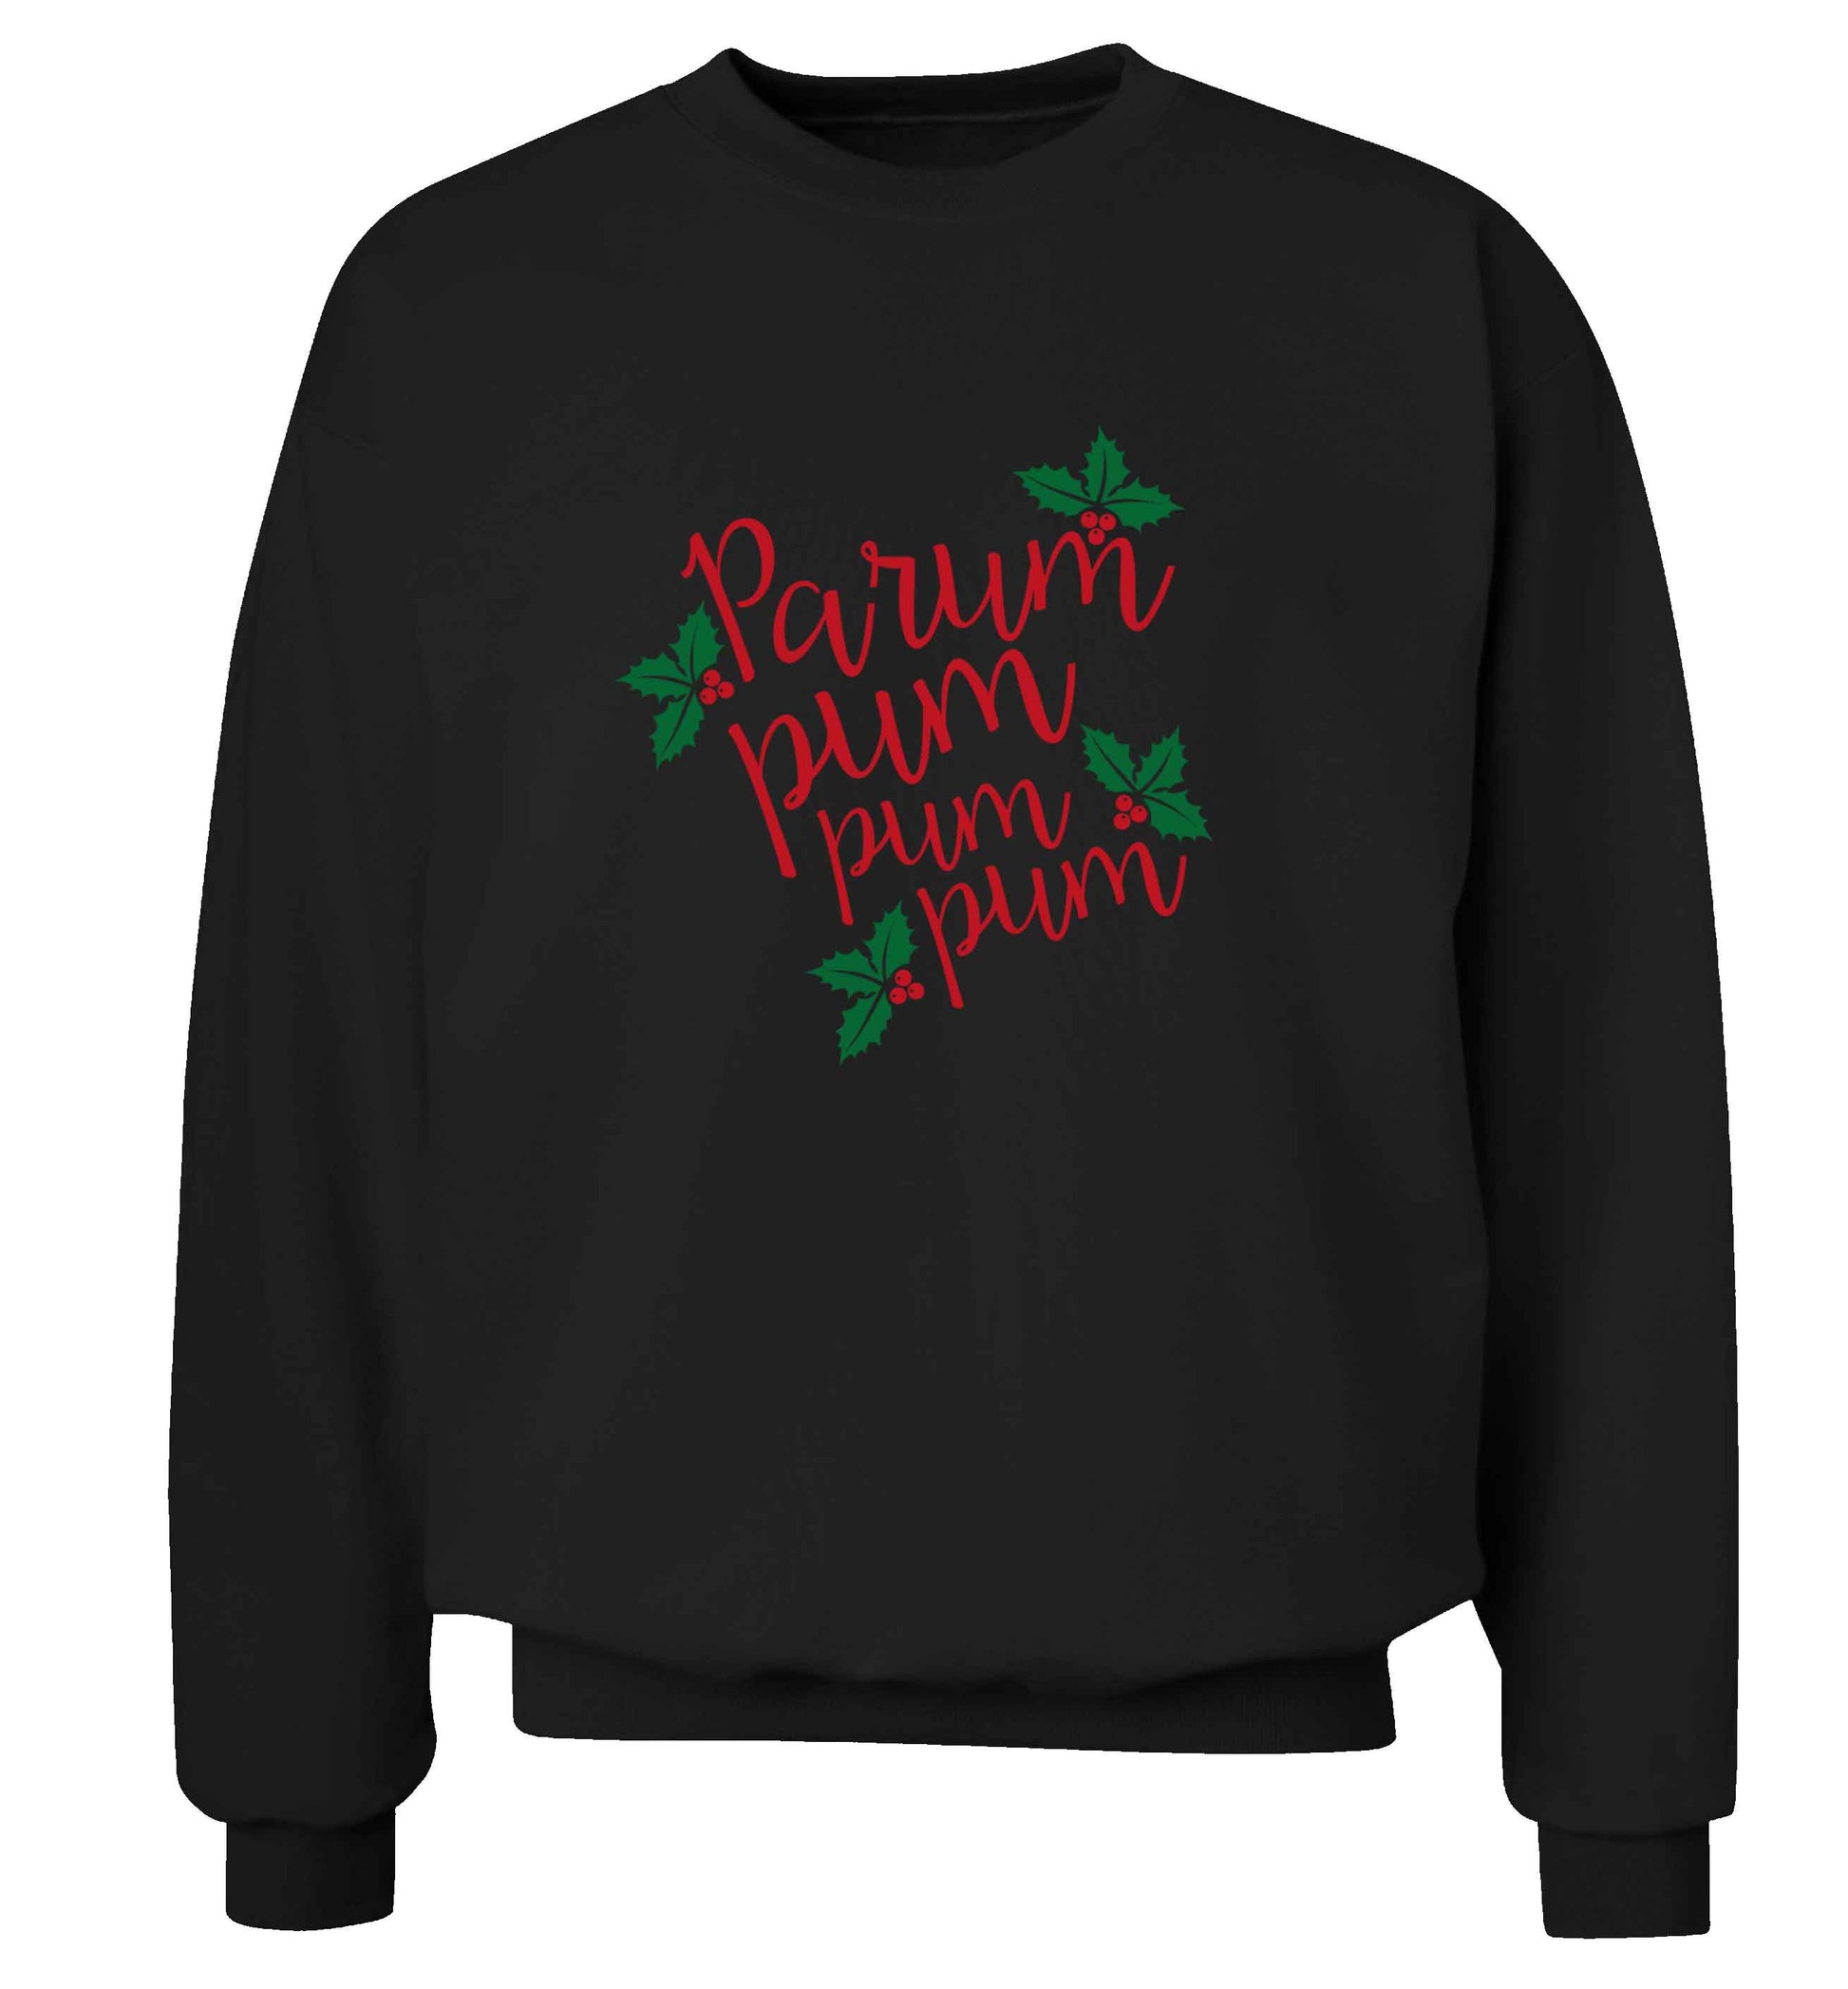 Pa rum pum pum pum adult's unisex black sweater 2XL